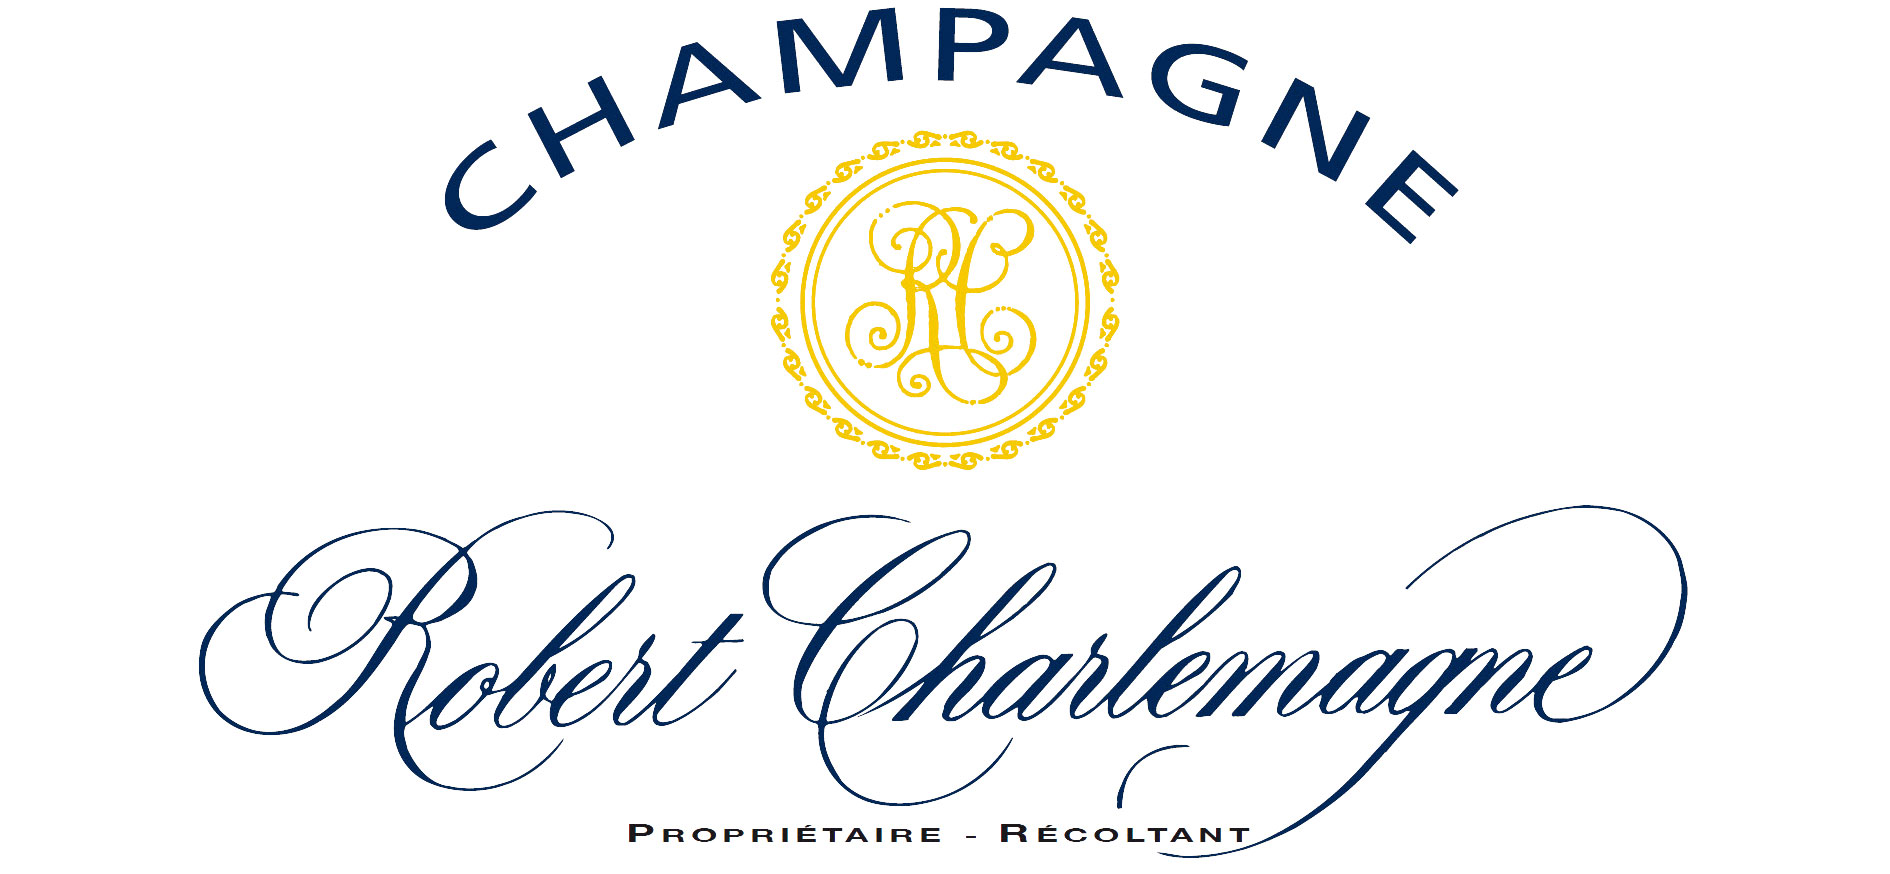 Champagne Robert Charlemagne